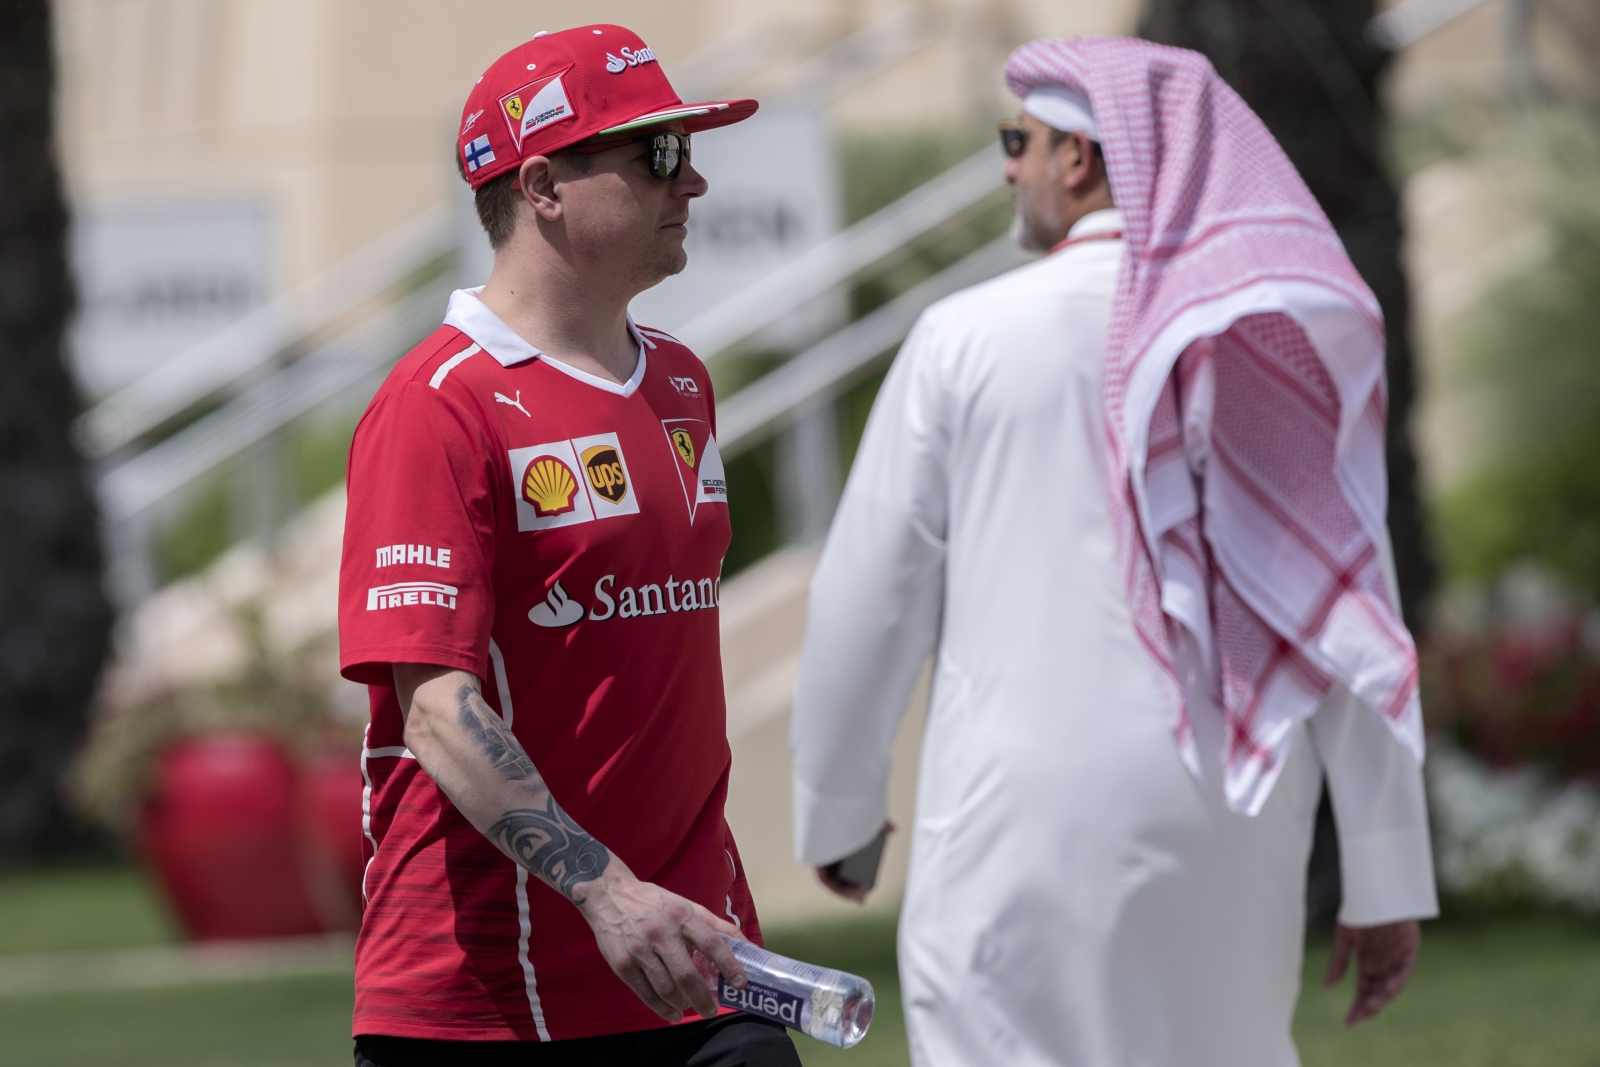 Grand Prix F1 w Bahrajnie. fot. EPA/VALDRIN XHEMAJ 